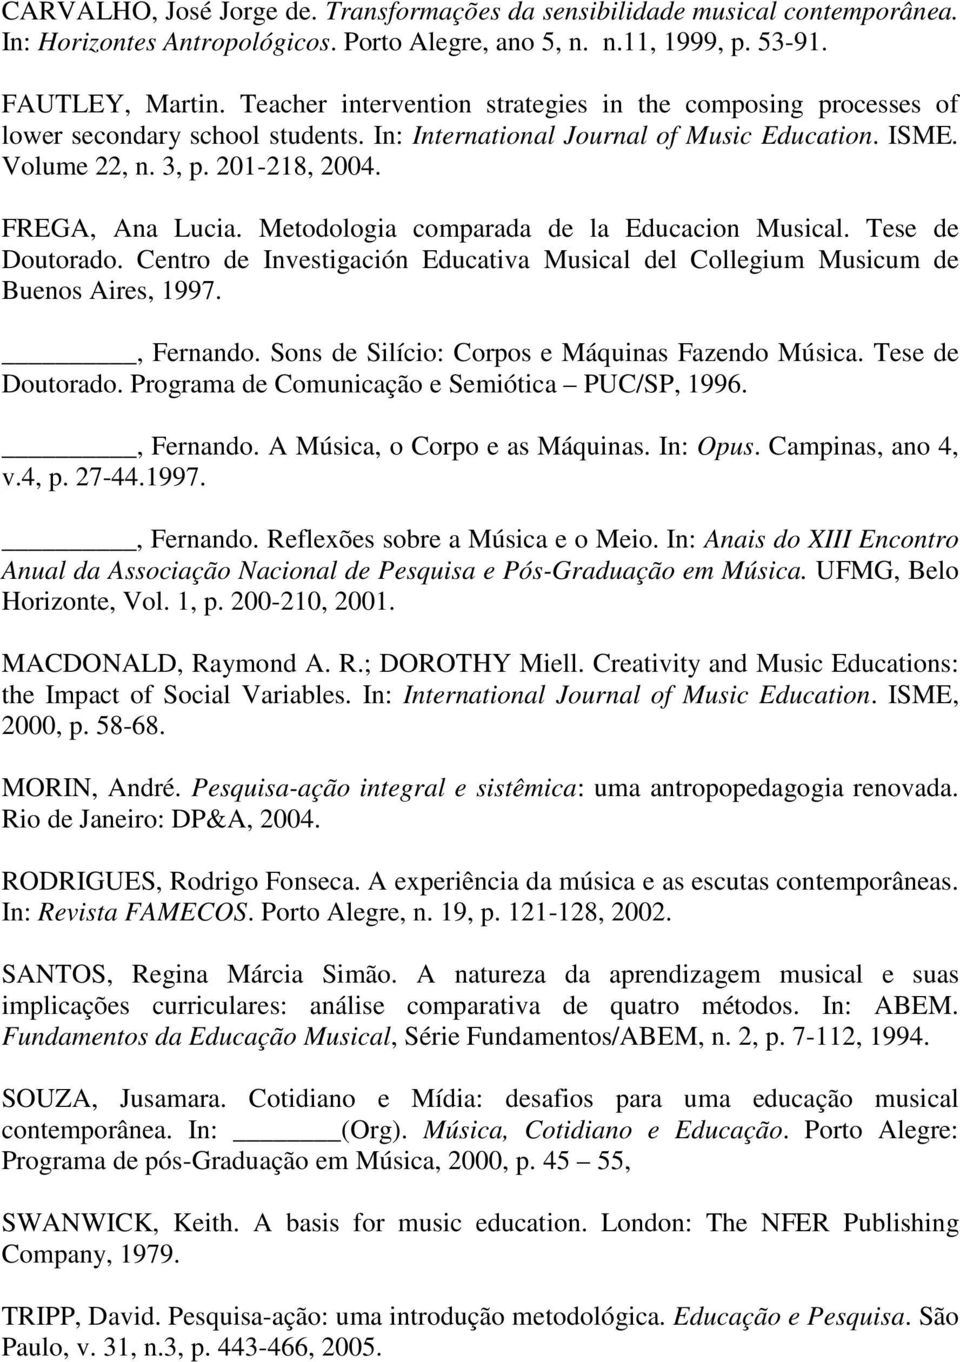 Metodologia comparada de la Educacion Musical. Tese de Doutorado. Centro de Investigación Educativa Musical del Collegium Musicum de Buenos Aires, 1997., Fernando.